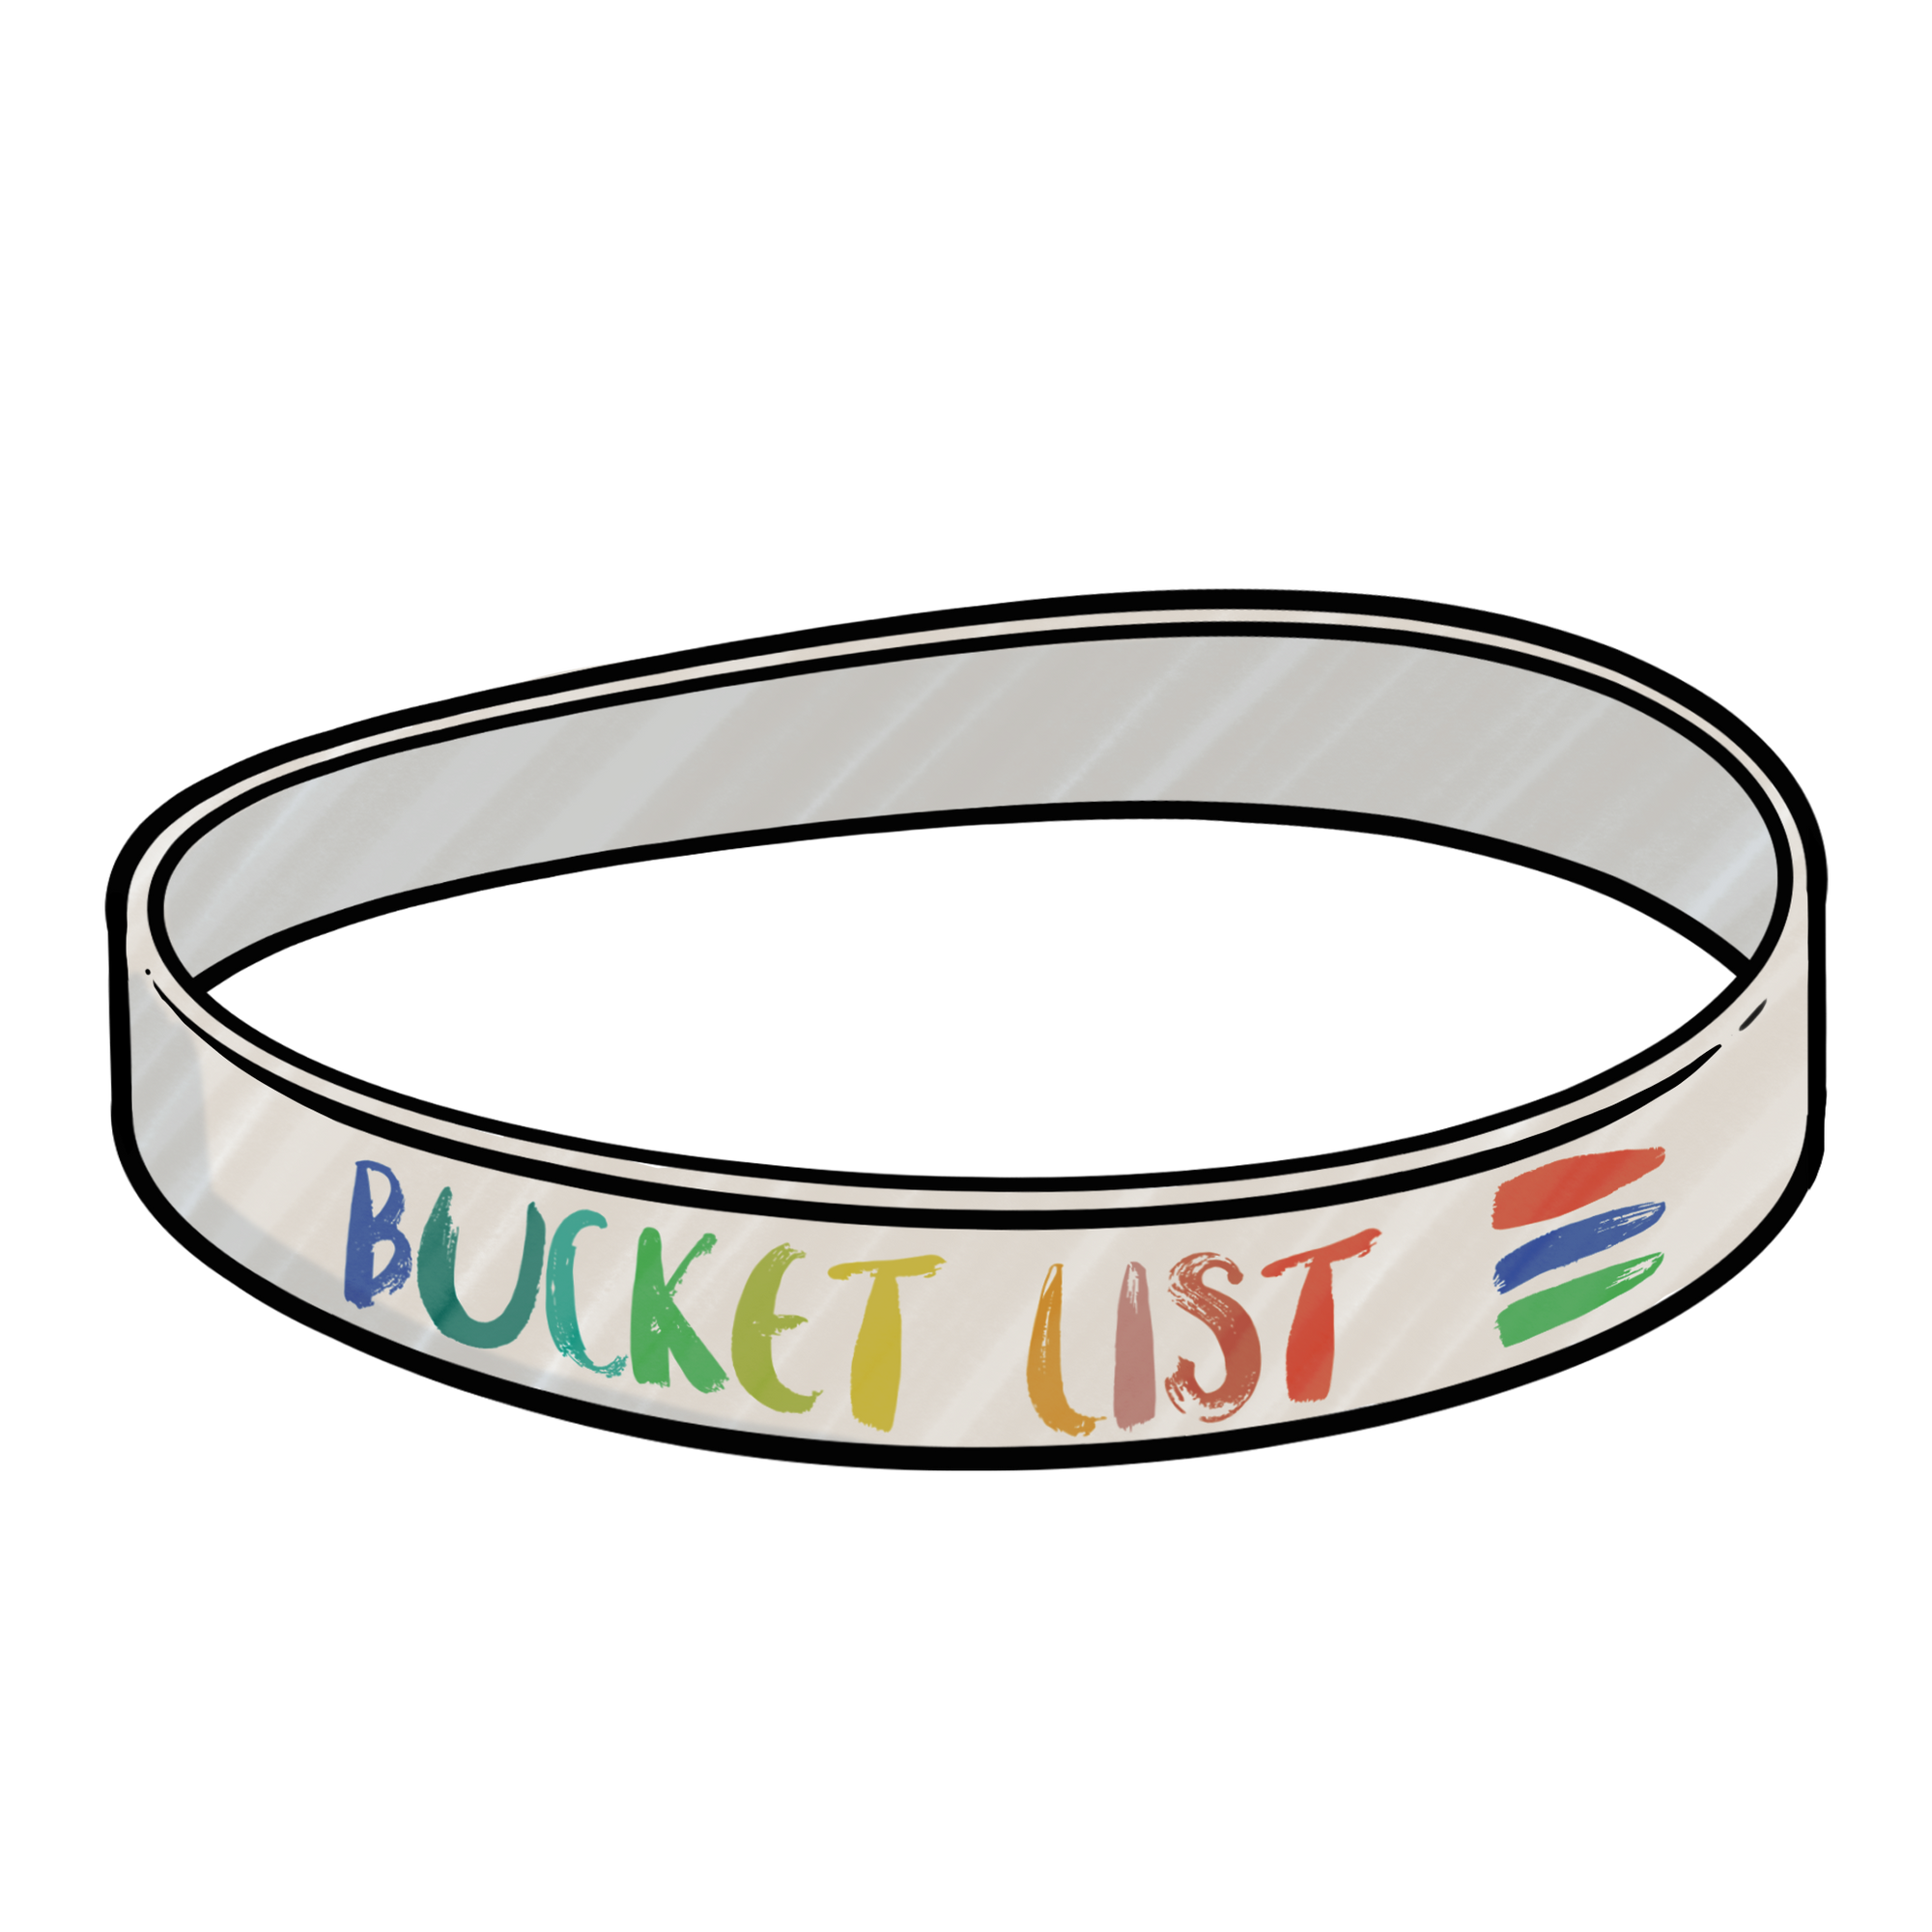 Bucket List Wristband